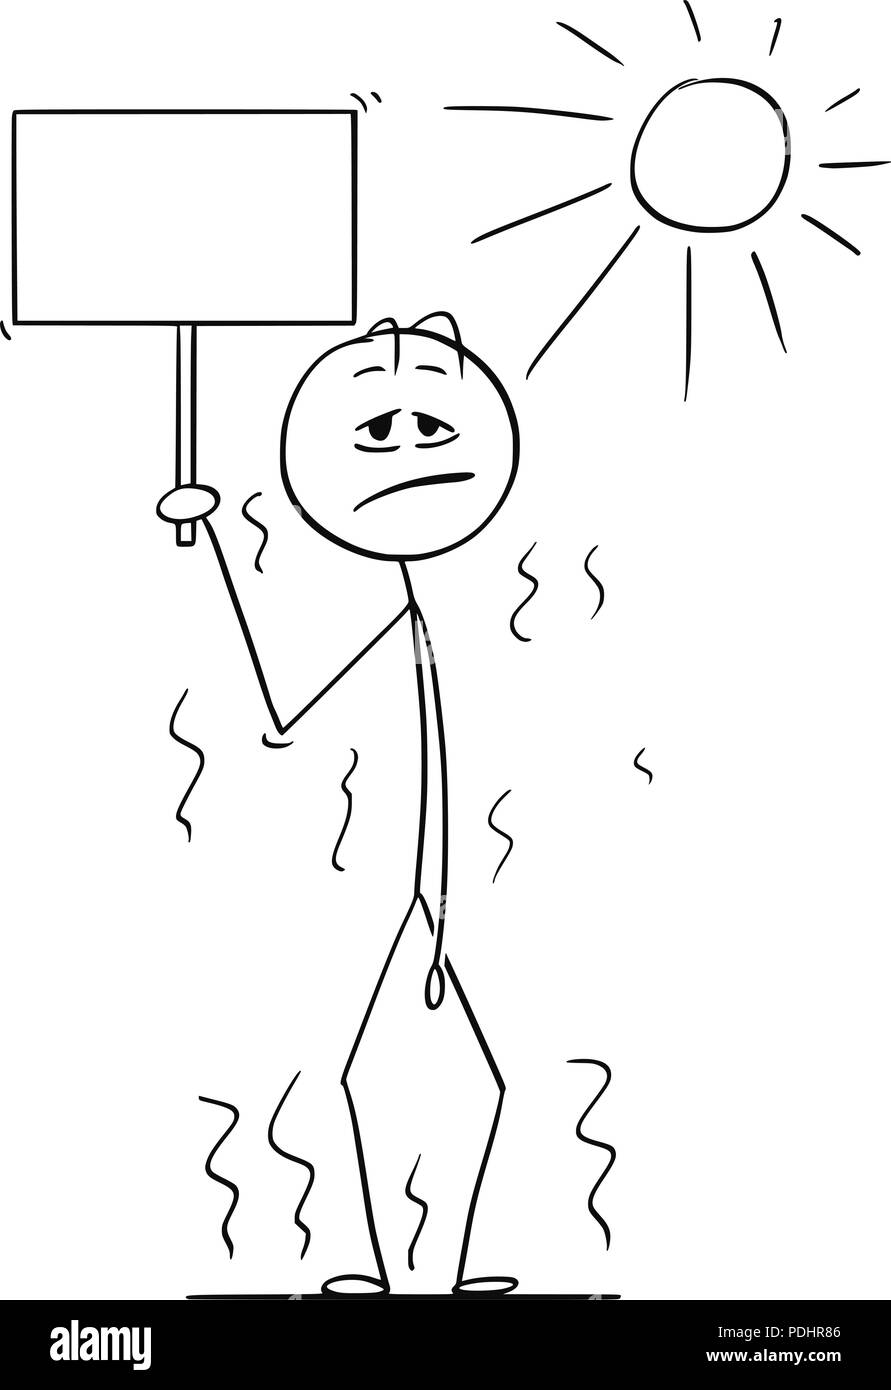 Cartoon of Man Standing in Hot Summer Heat With Empty Sign in Hand Stock Vector